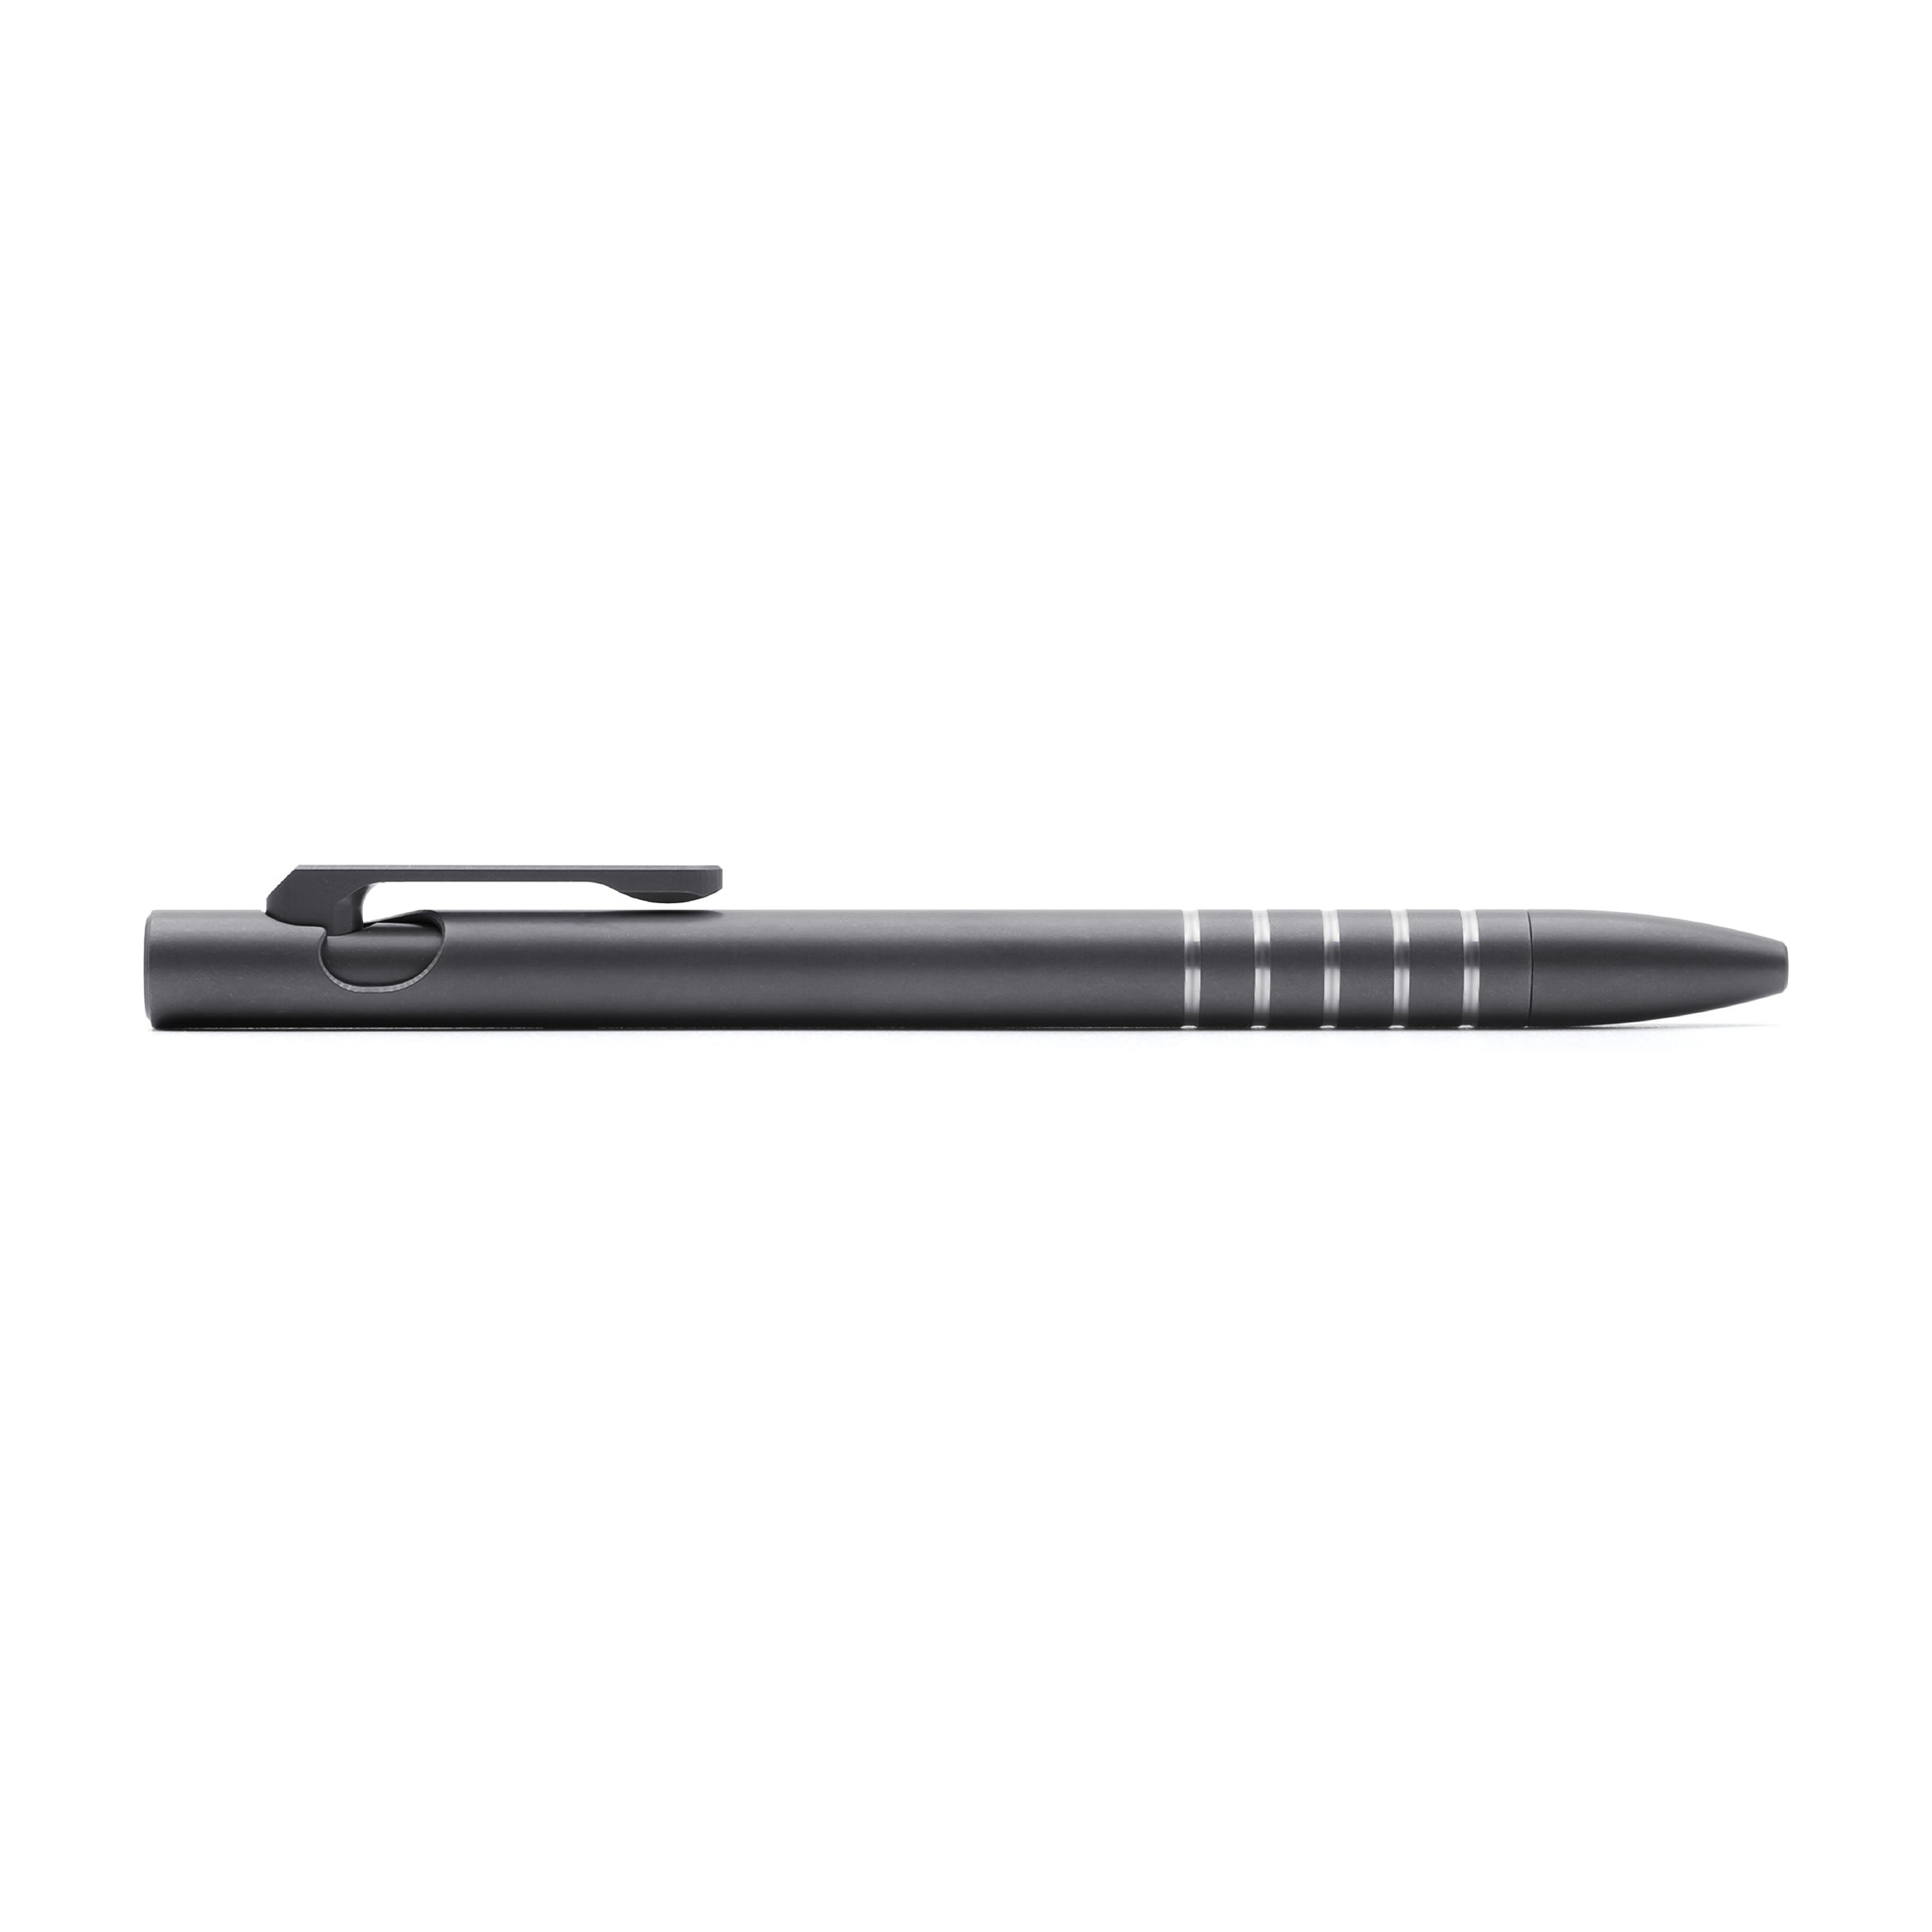 Colarr 24 Pcs Western Pens Smooth Writing Ballpoint Black